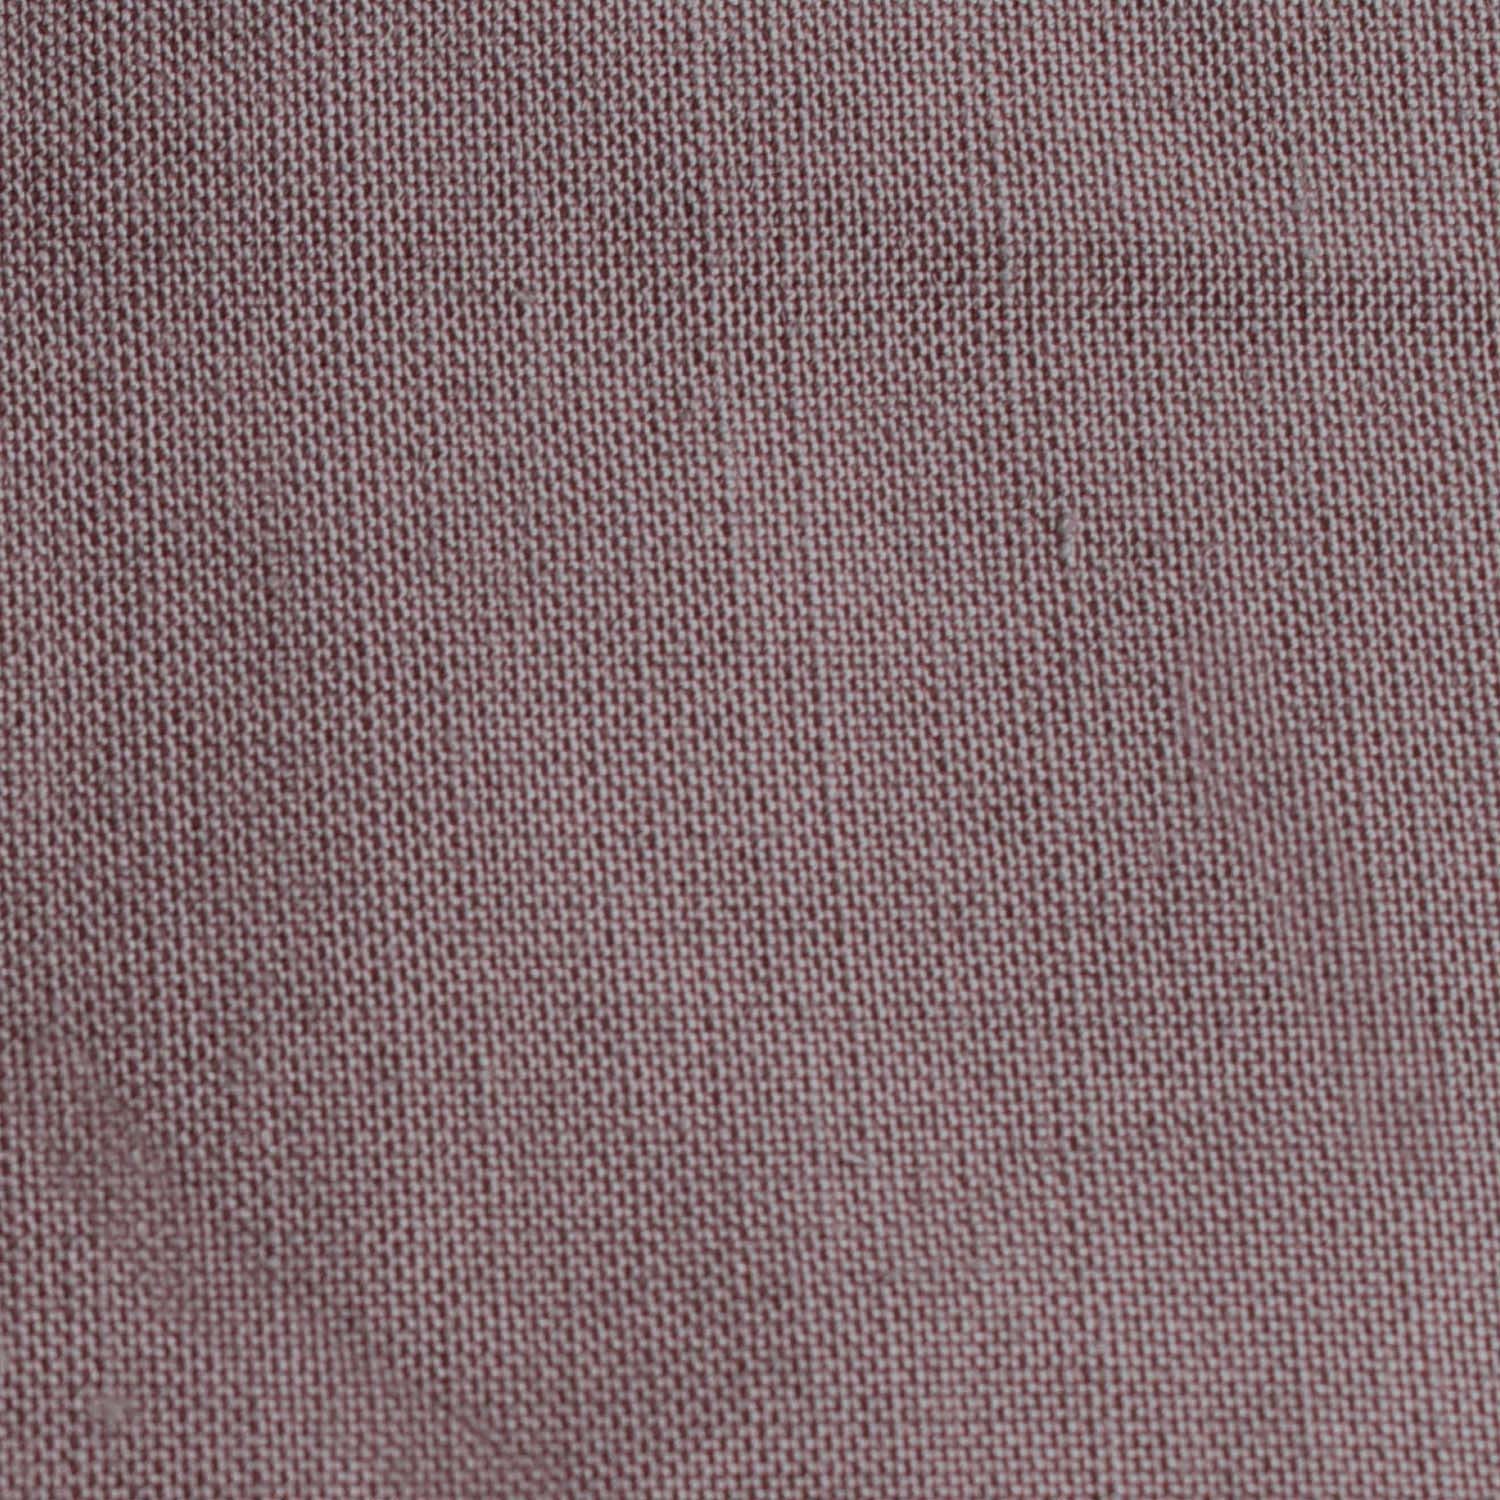 Grey Slub Linen Fabric Skinny Tie L178